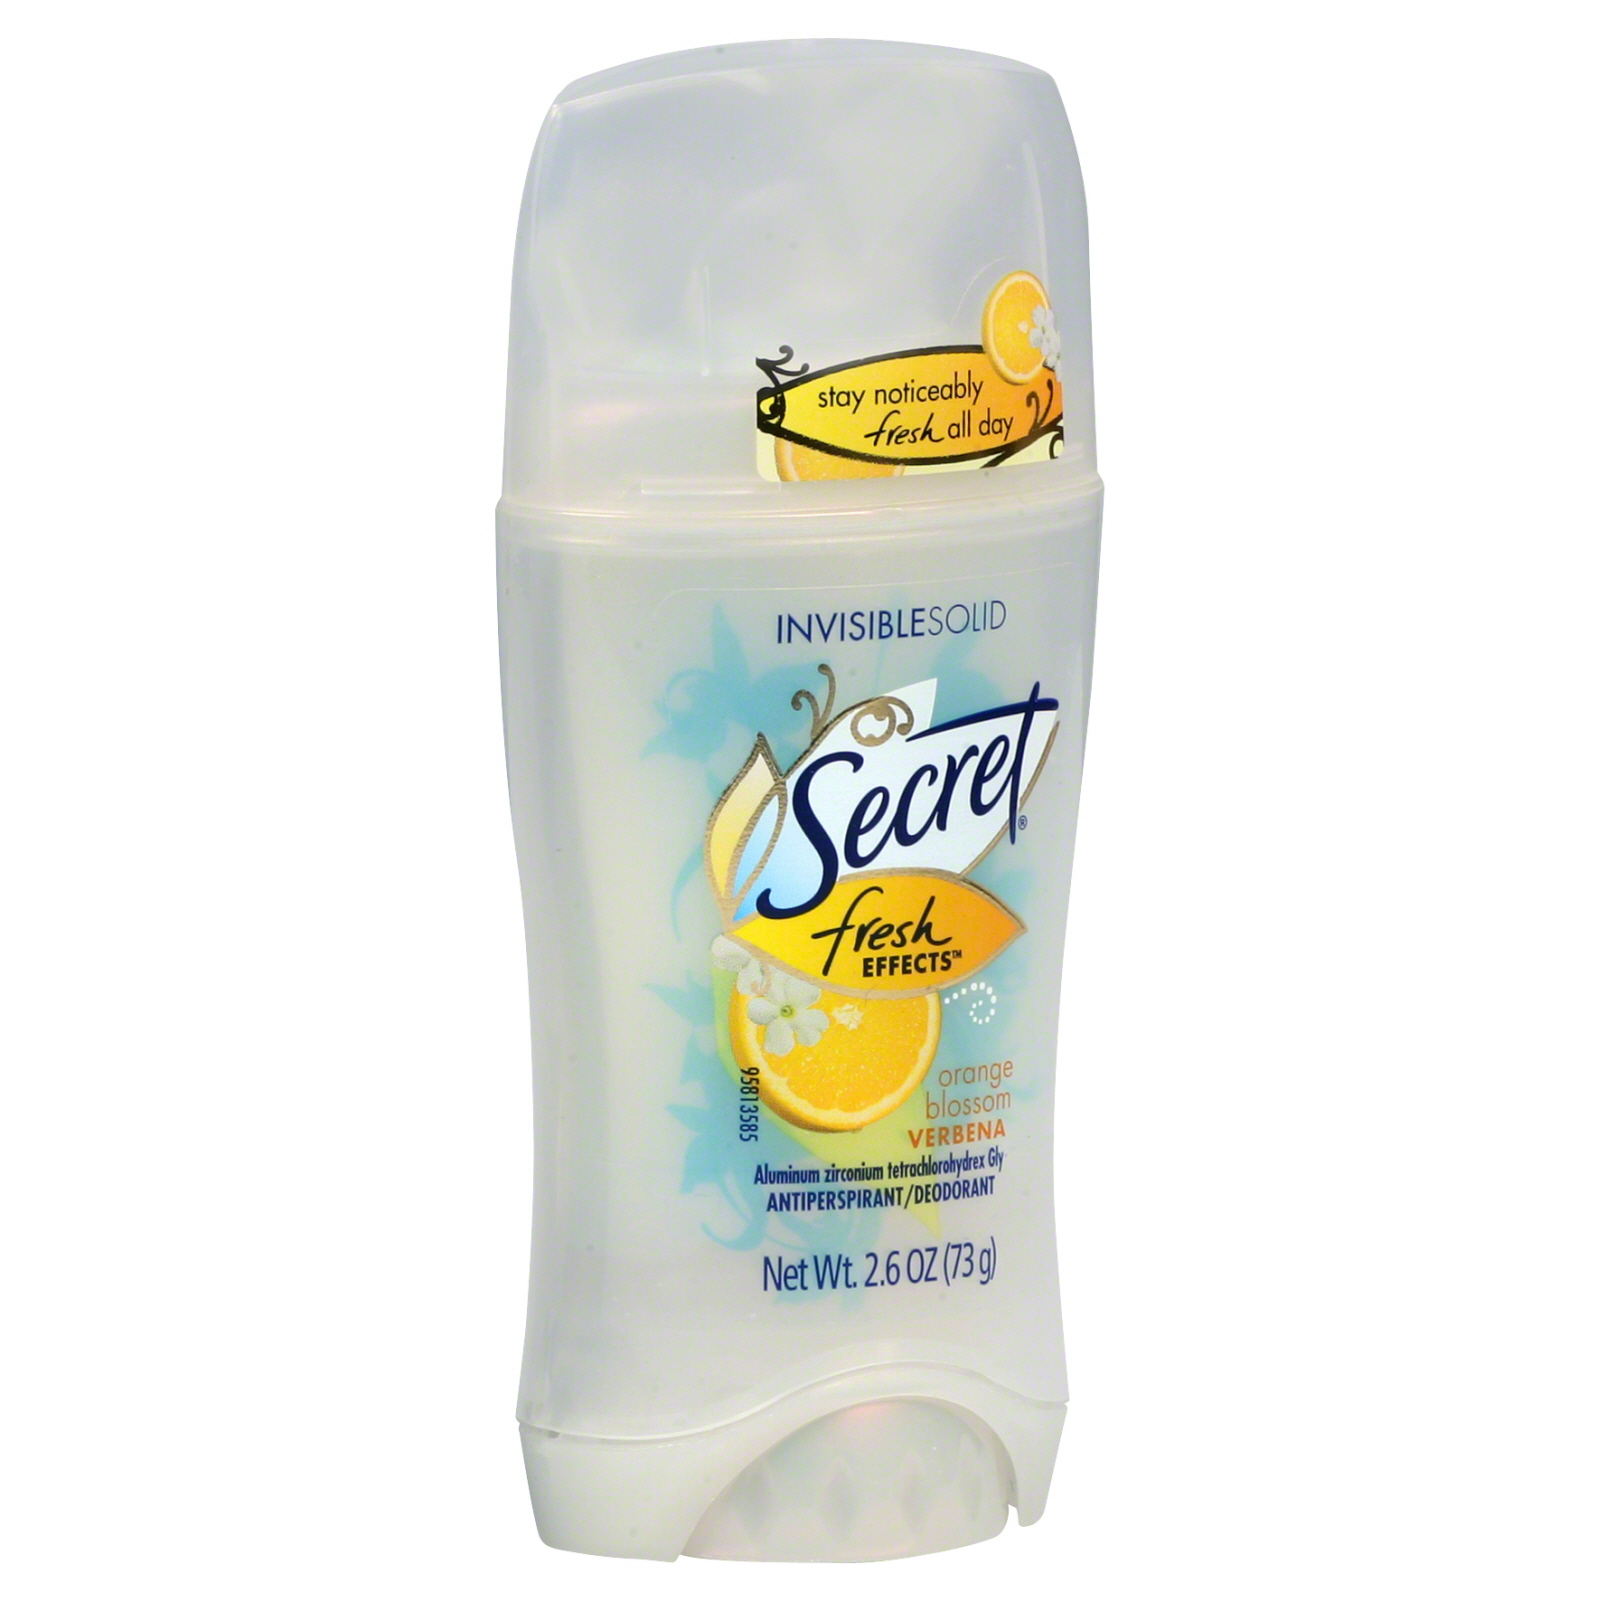 Secret Fresh Effects Antiperspirant/Deodorant, Invisible Solid, Orange Blossom Verbena, 2.6 oz (73 g)